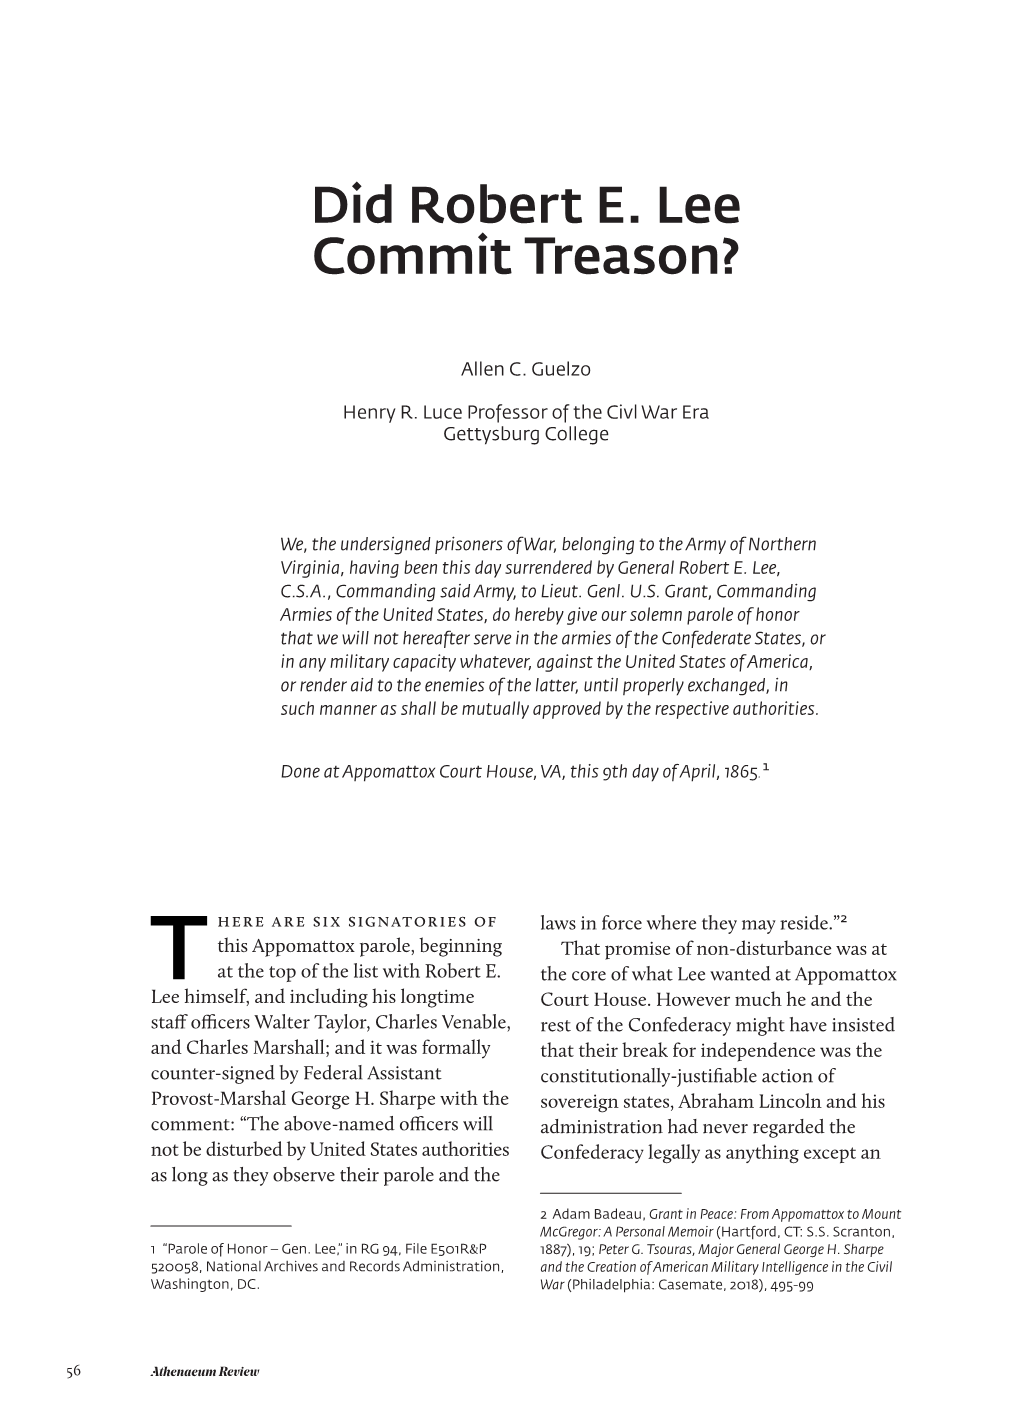 Did Robert E. Lee Commit Treason?